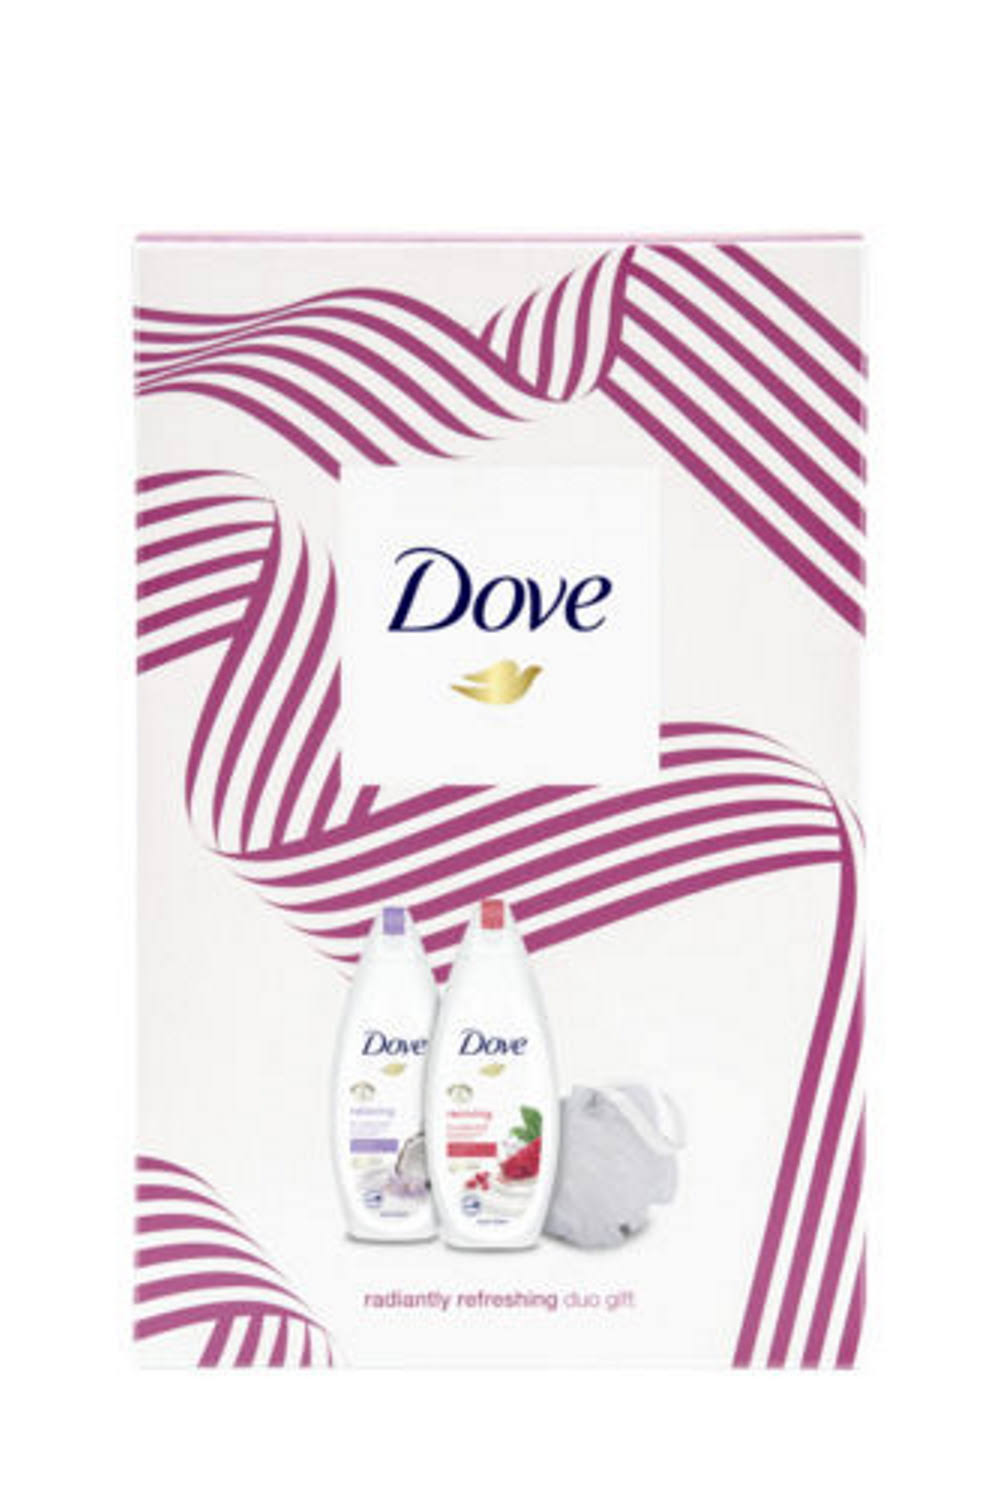 Dove Radiantly Refreshing Duo Gift Set